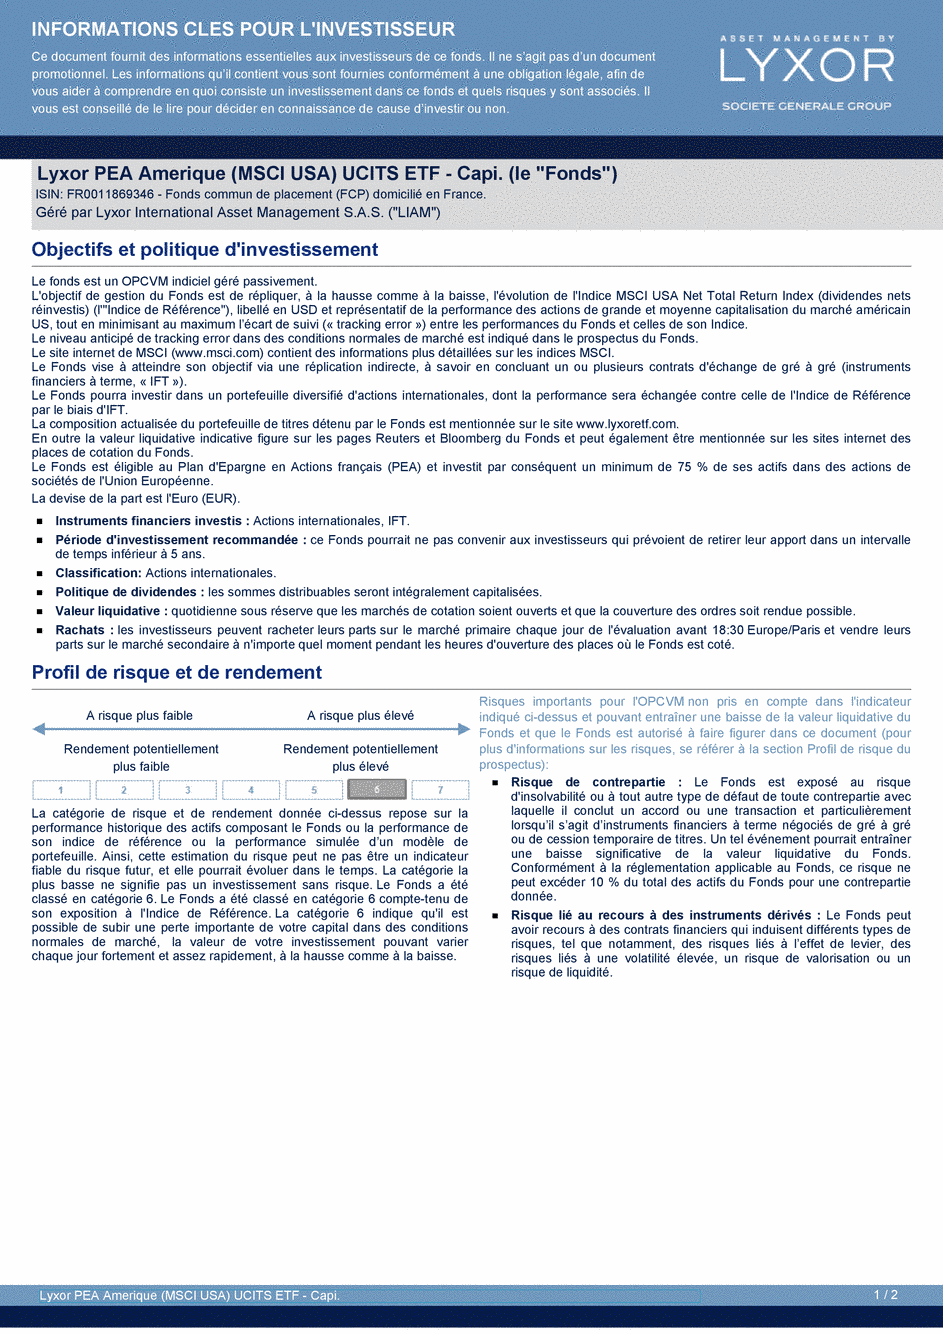 DICI Lyxor PEA Amerique (MSCI USA) UCITS ETF - Capi. - 19/02/2021 - Français